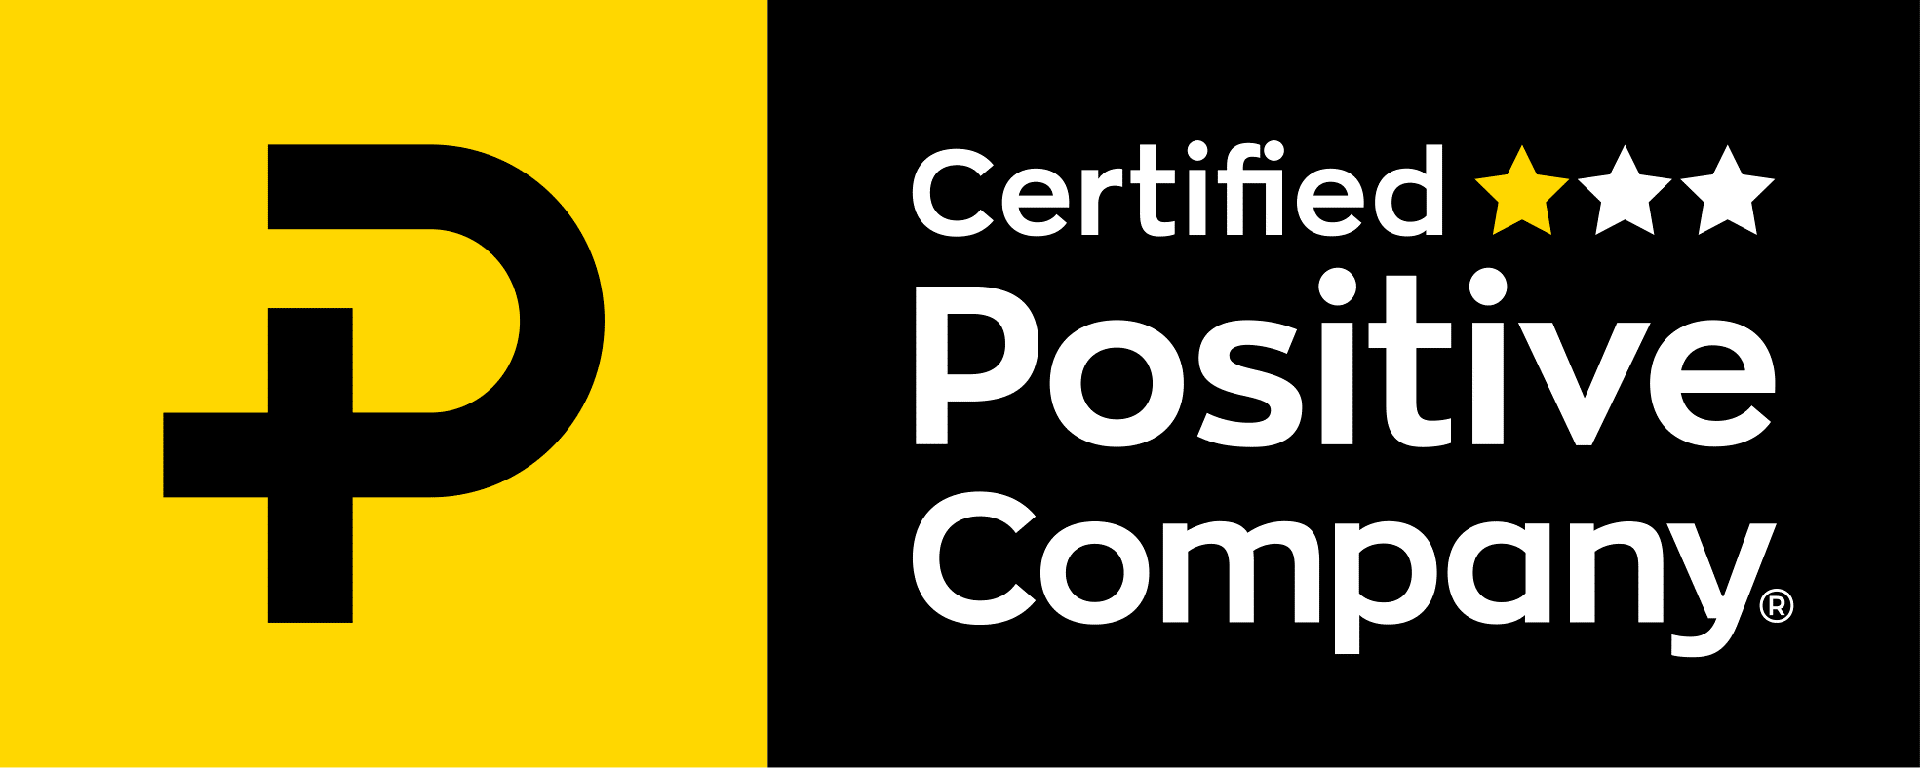 Certification Positive Company